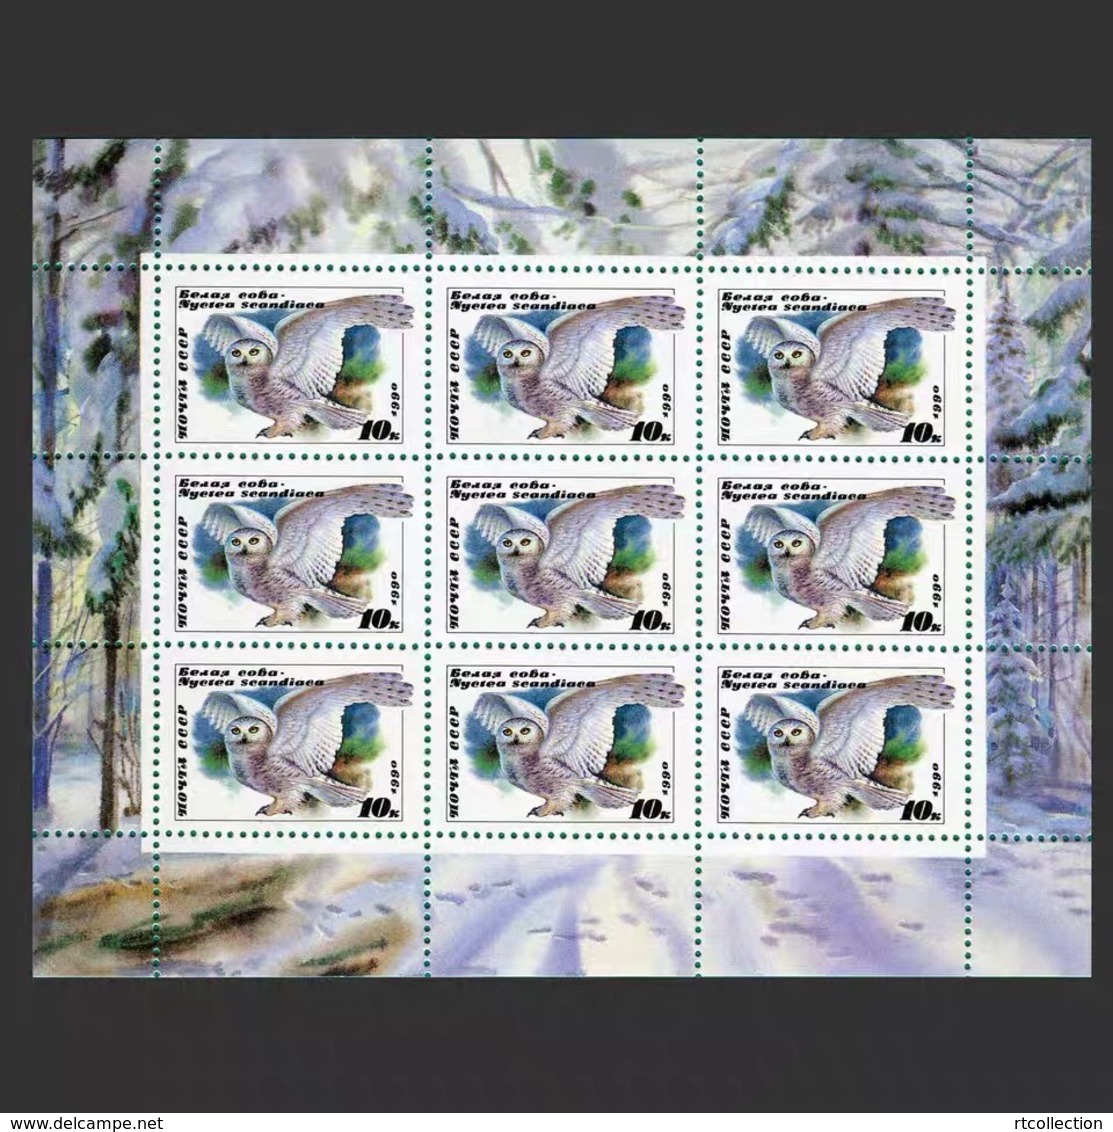 USSR Russia 1990 Sheetlet Owls Birds Animals Animal Fauna Owl Bird Nature Stamps M/S MNH Mi 6063-5 SG 6117-19 Sc 5871-73 - Owls